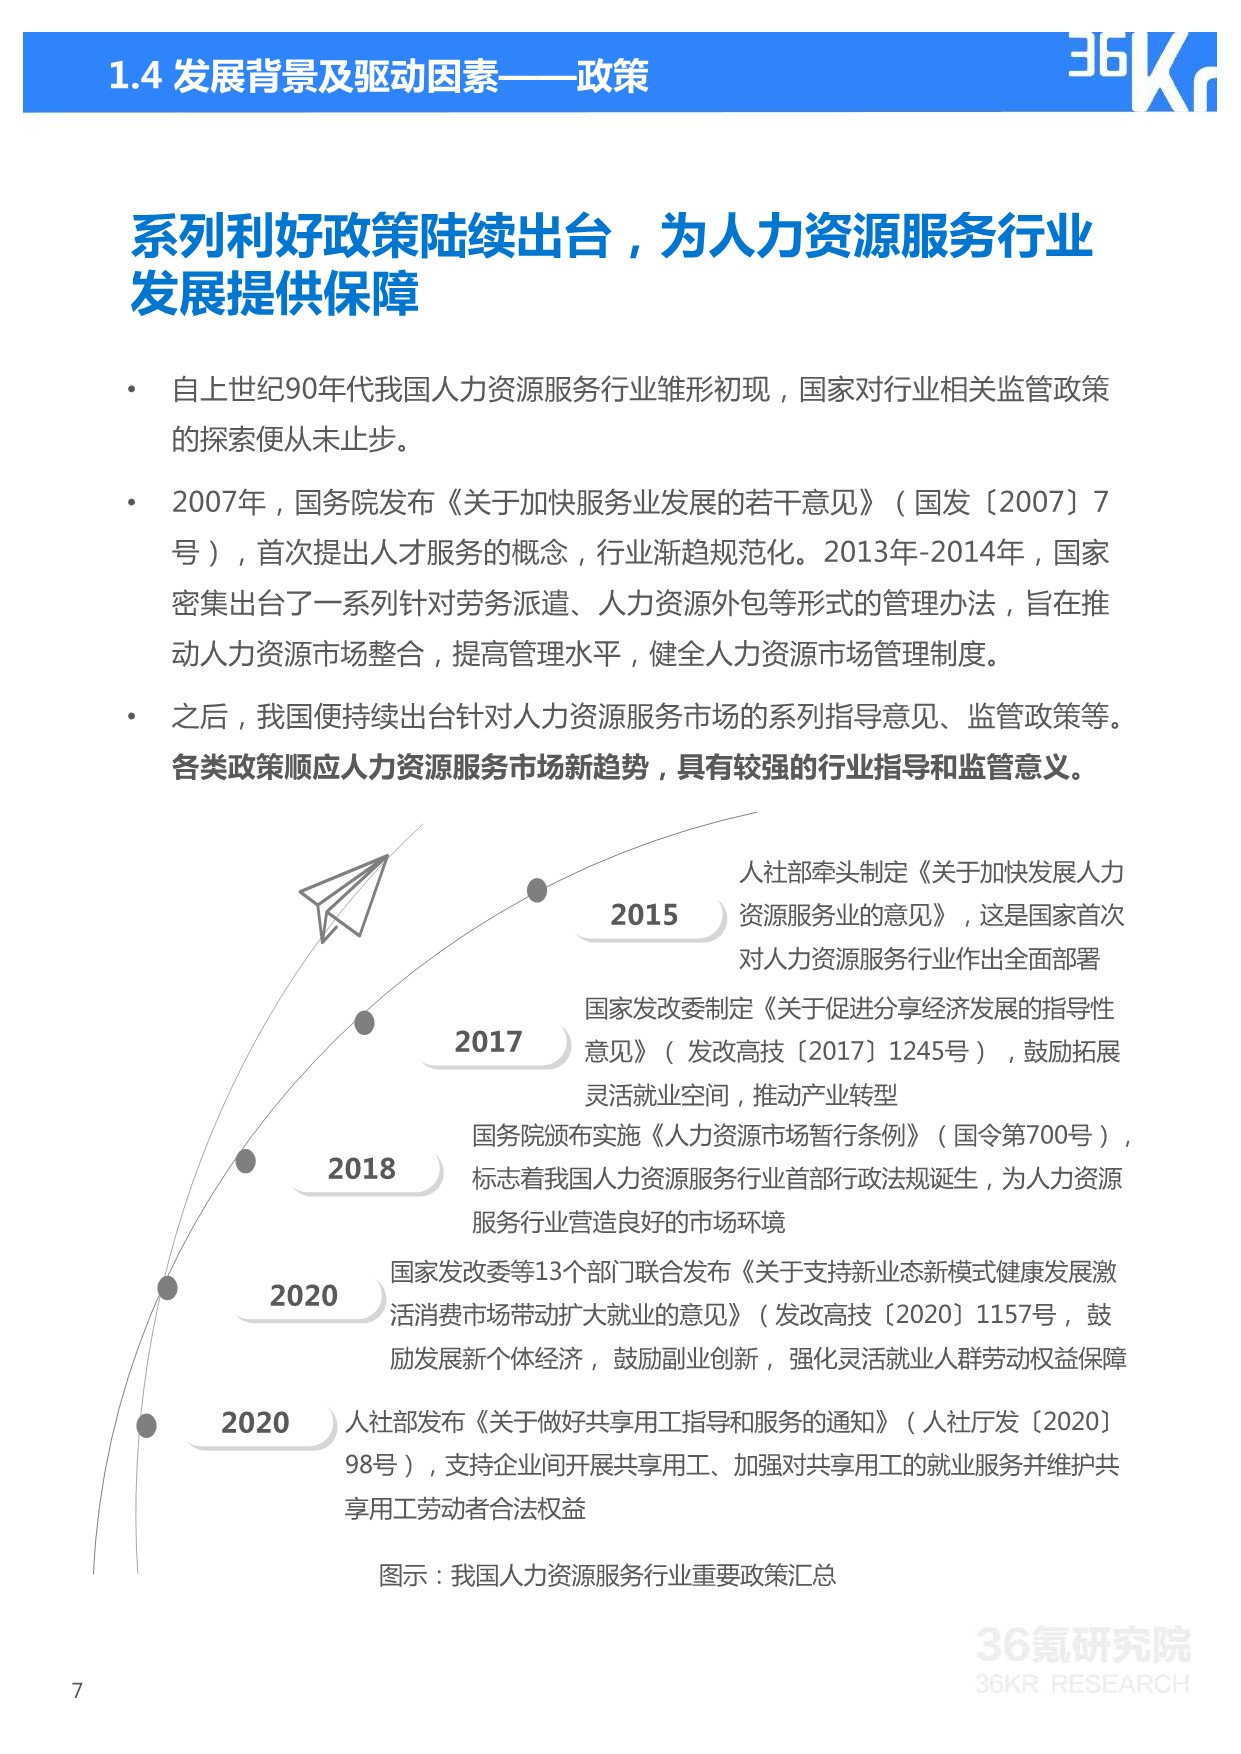 36Kr-2021年中国人力资源服务行业研究报告_7.jpeg